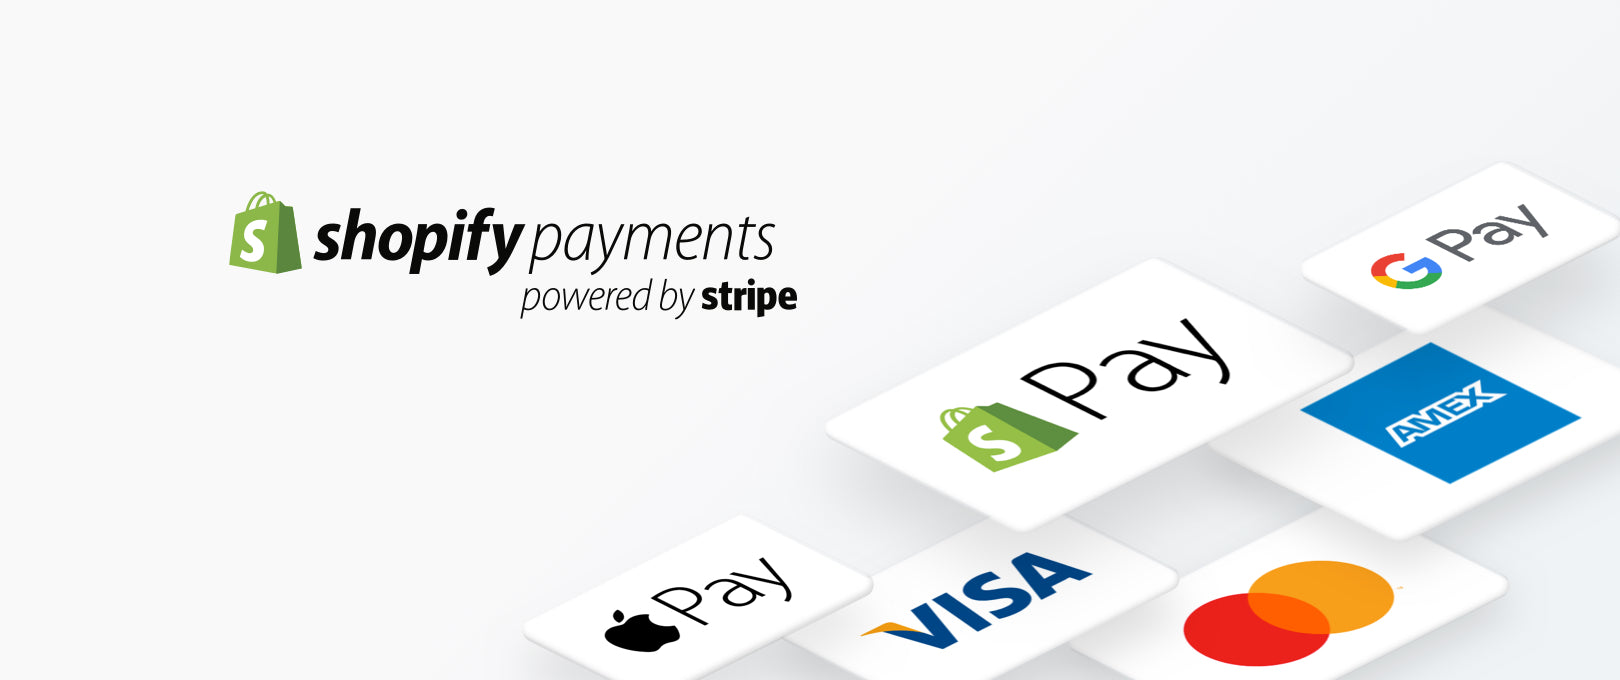 Shopify Payments, Google Pay, Apple Pay, Paypal, Visa, MasterCard, Amazon Pay